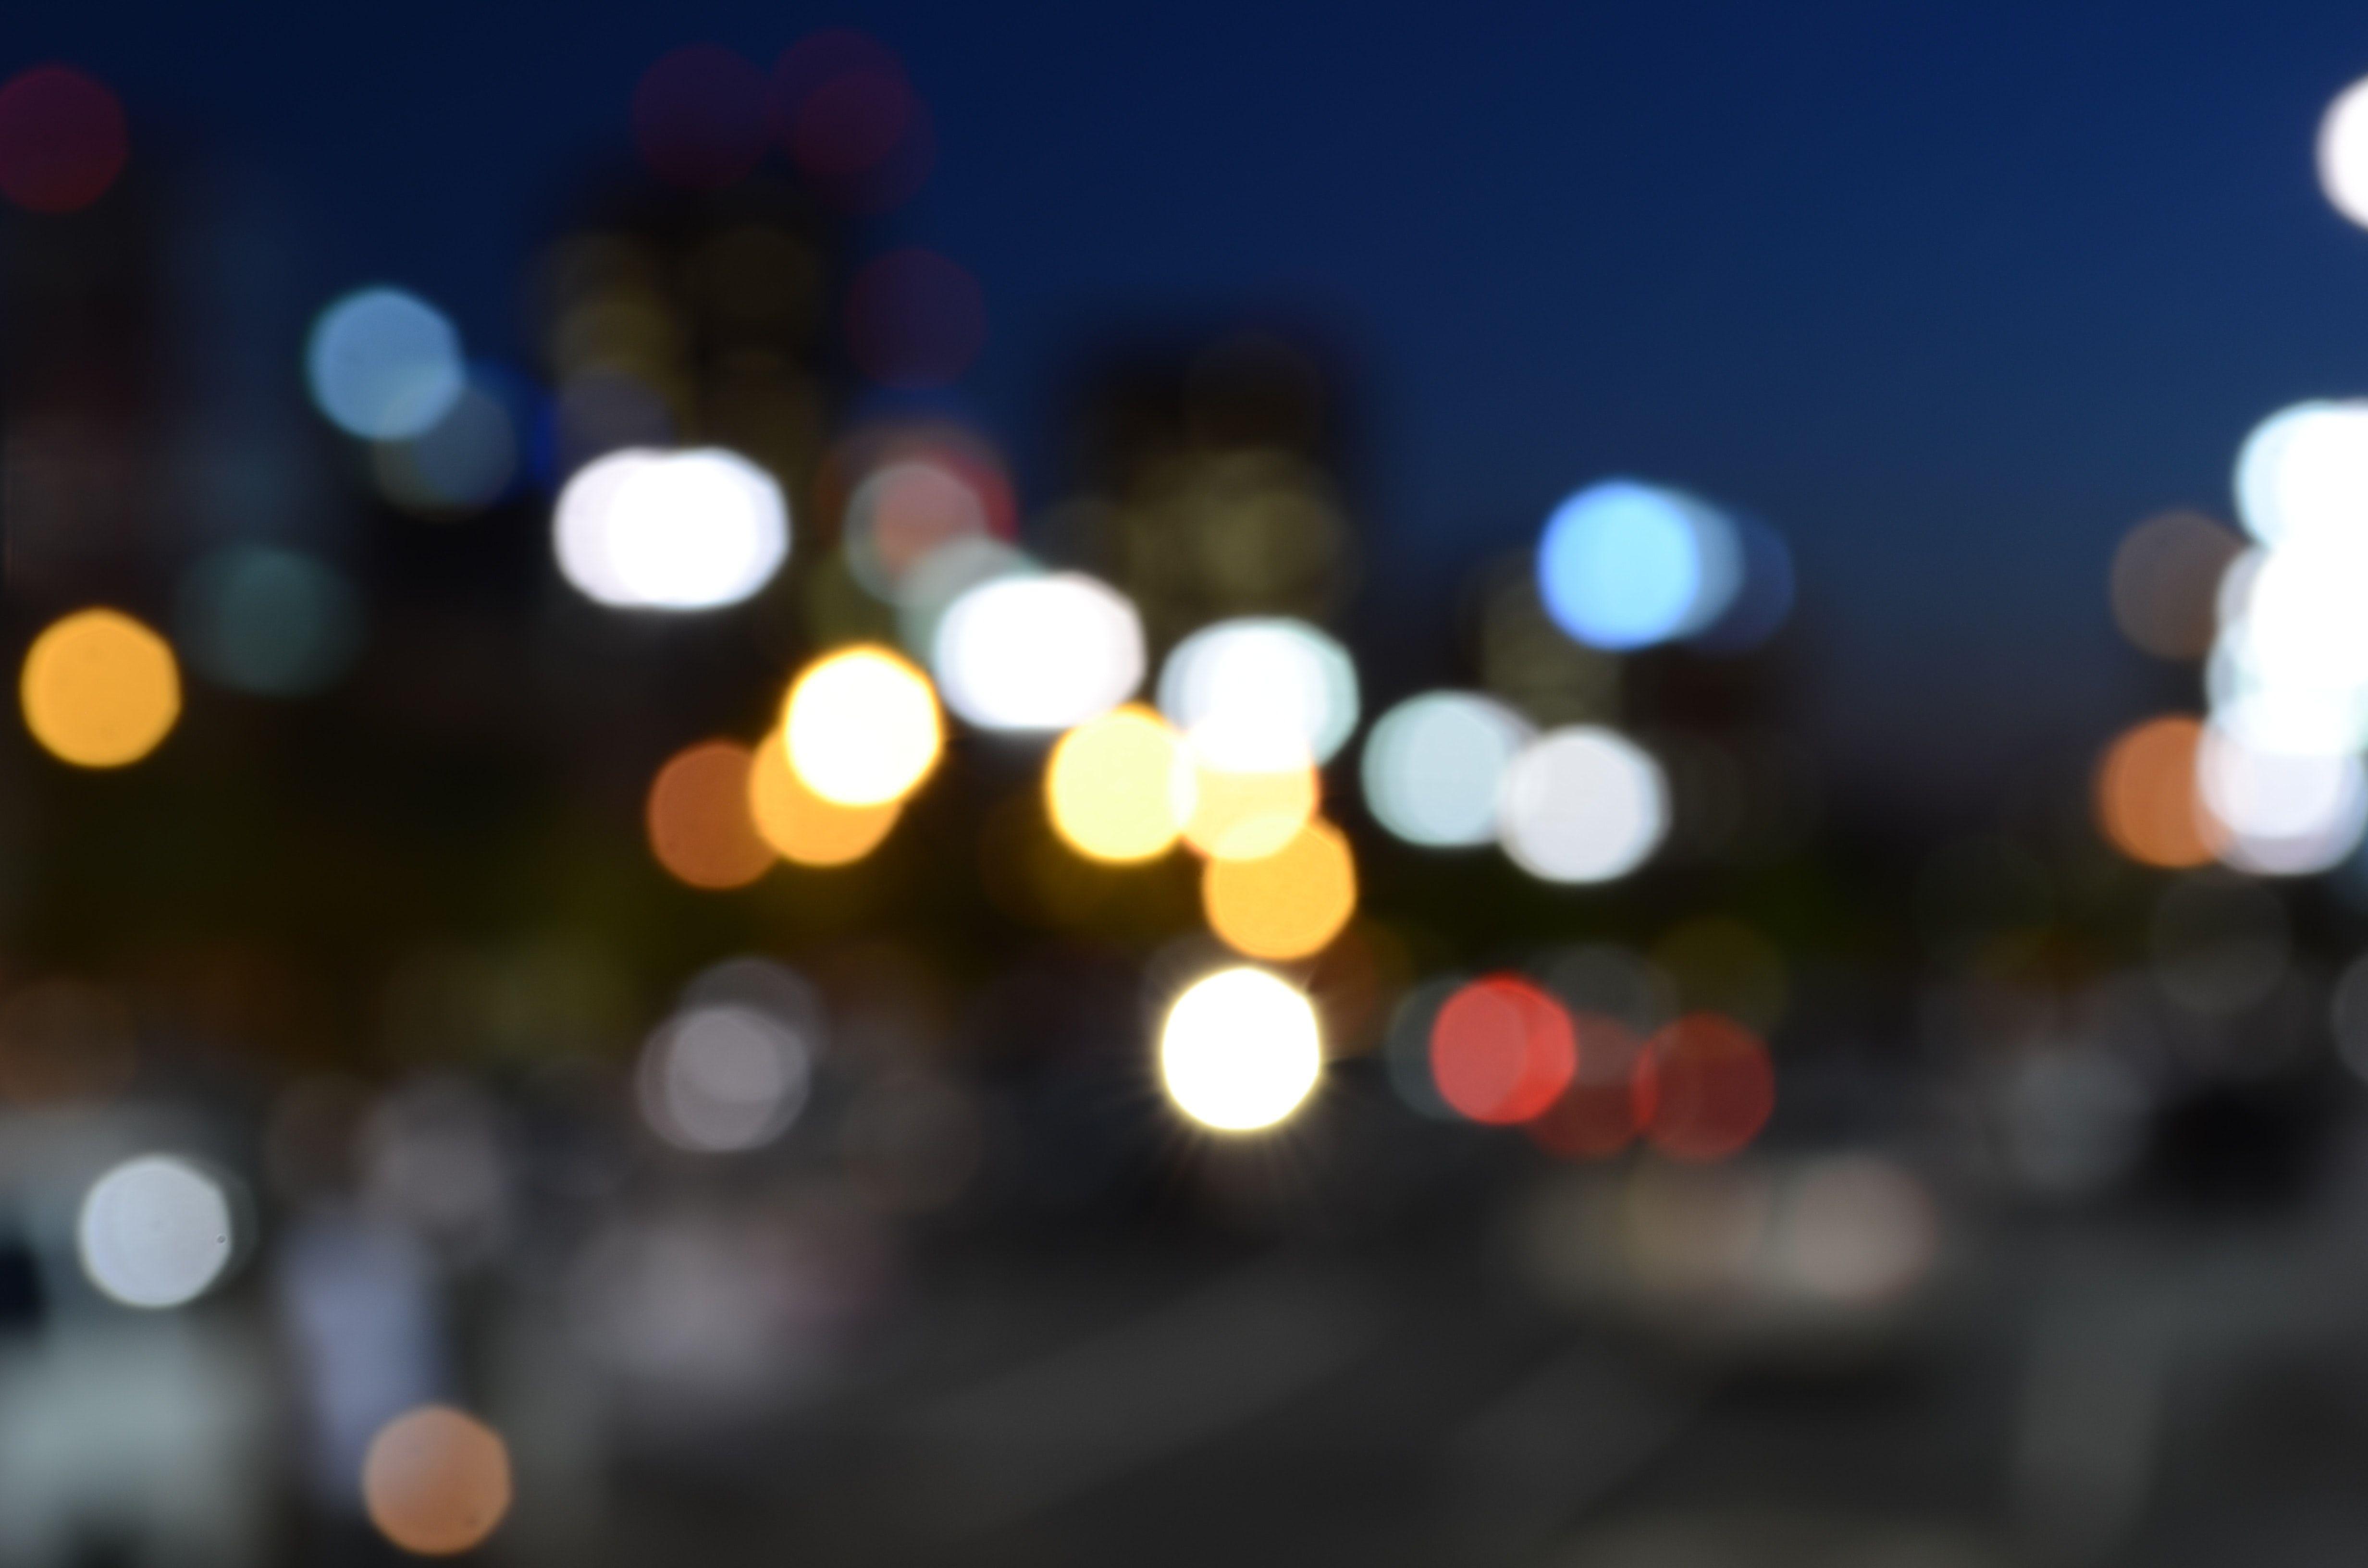 City Blur Wallpapers - Top Free City Blur Backgrounds - Wallpaperaccess